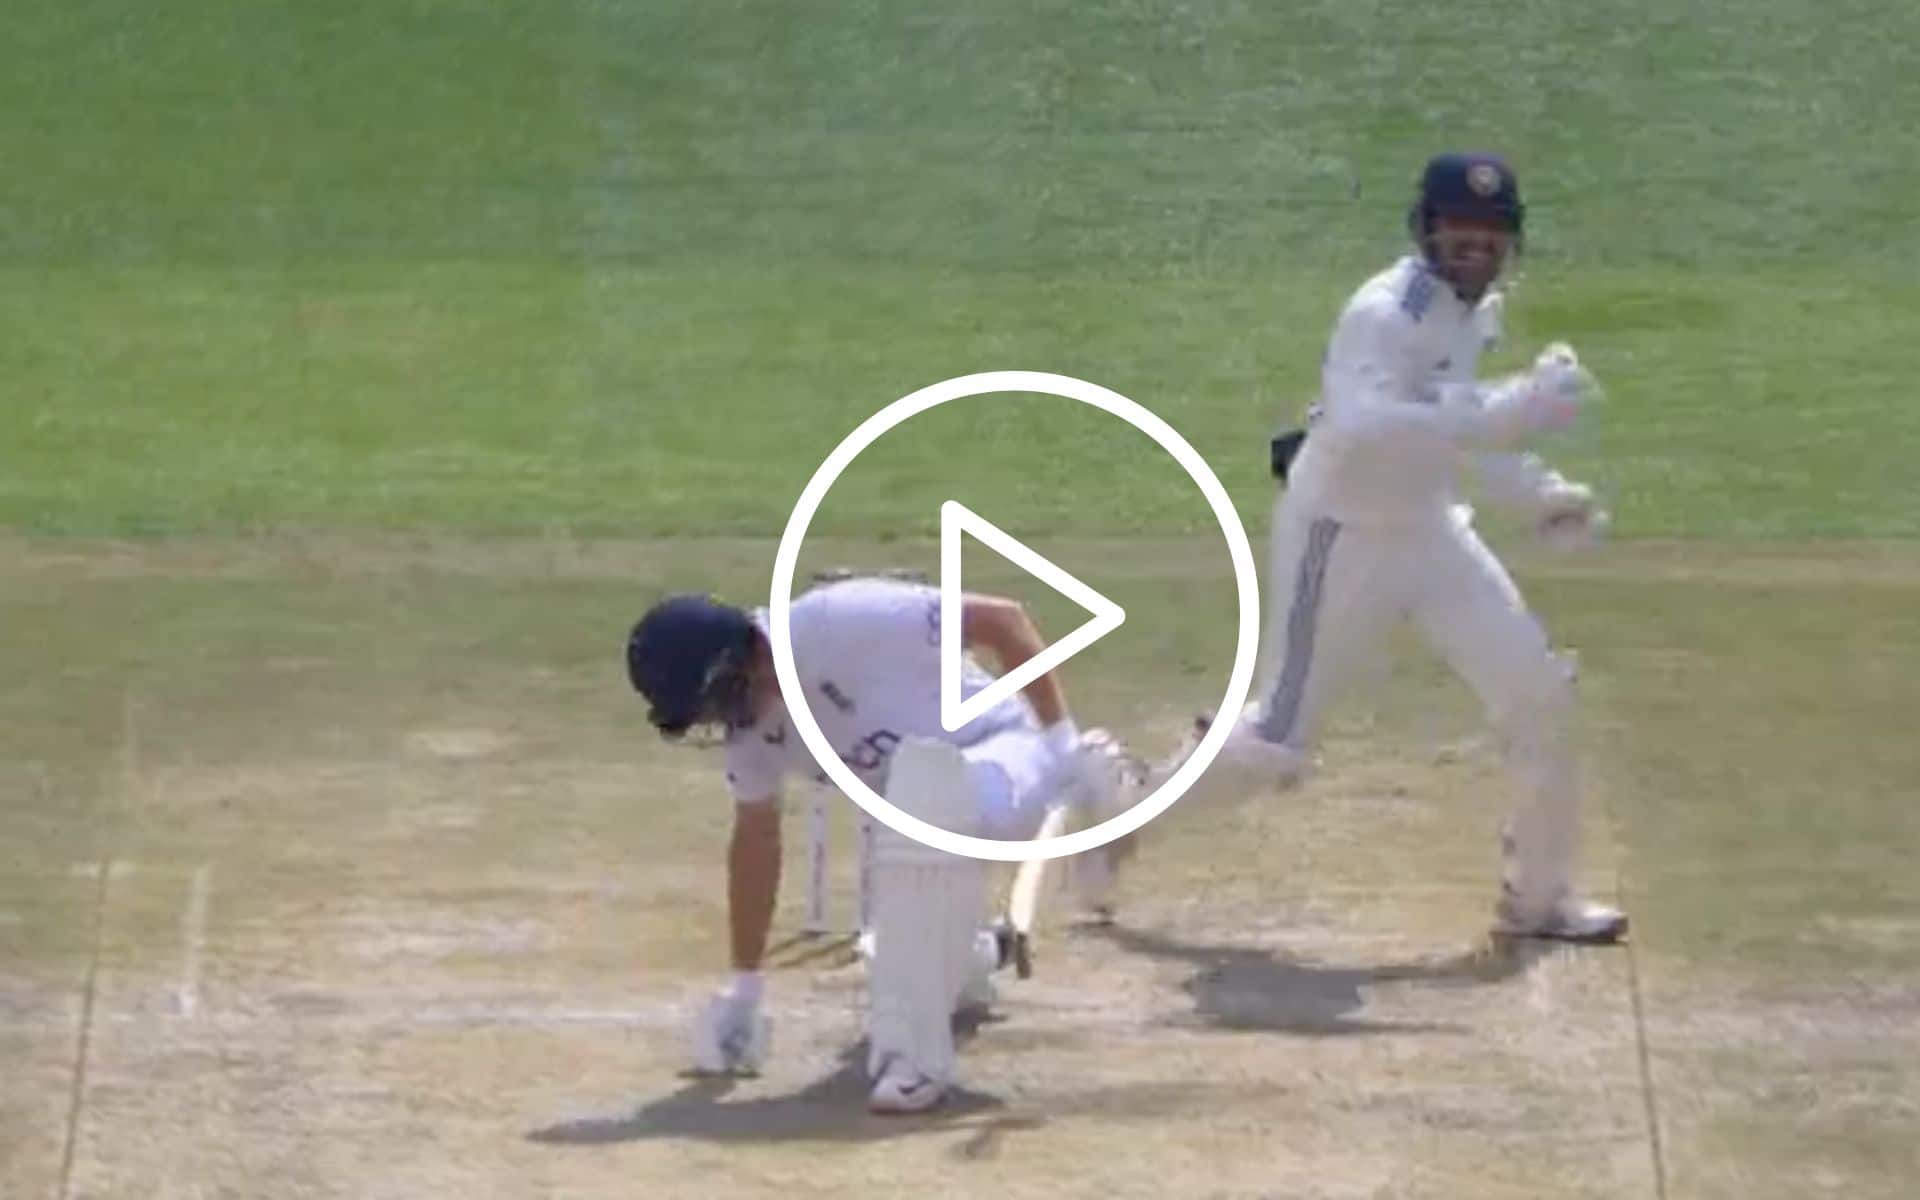 [Watch] Kuldeep Yadav Tears England Apart As Bairstow ‘Embarrassed’ In His 100th Test